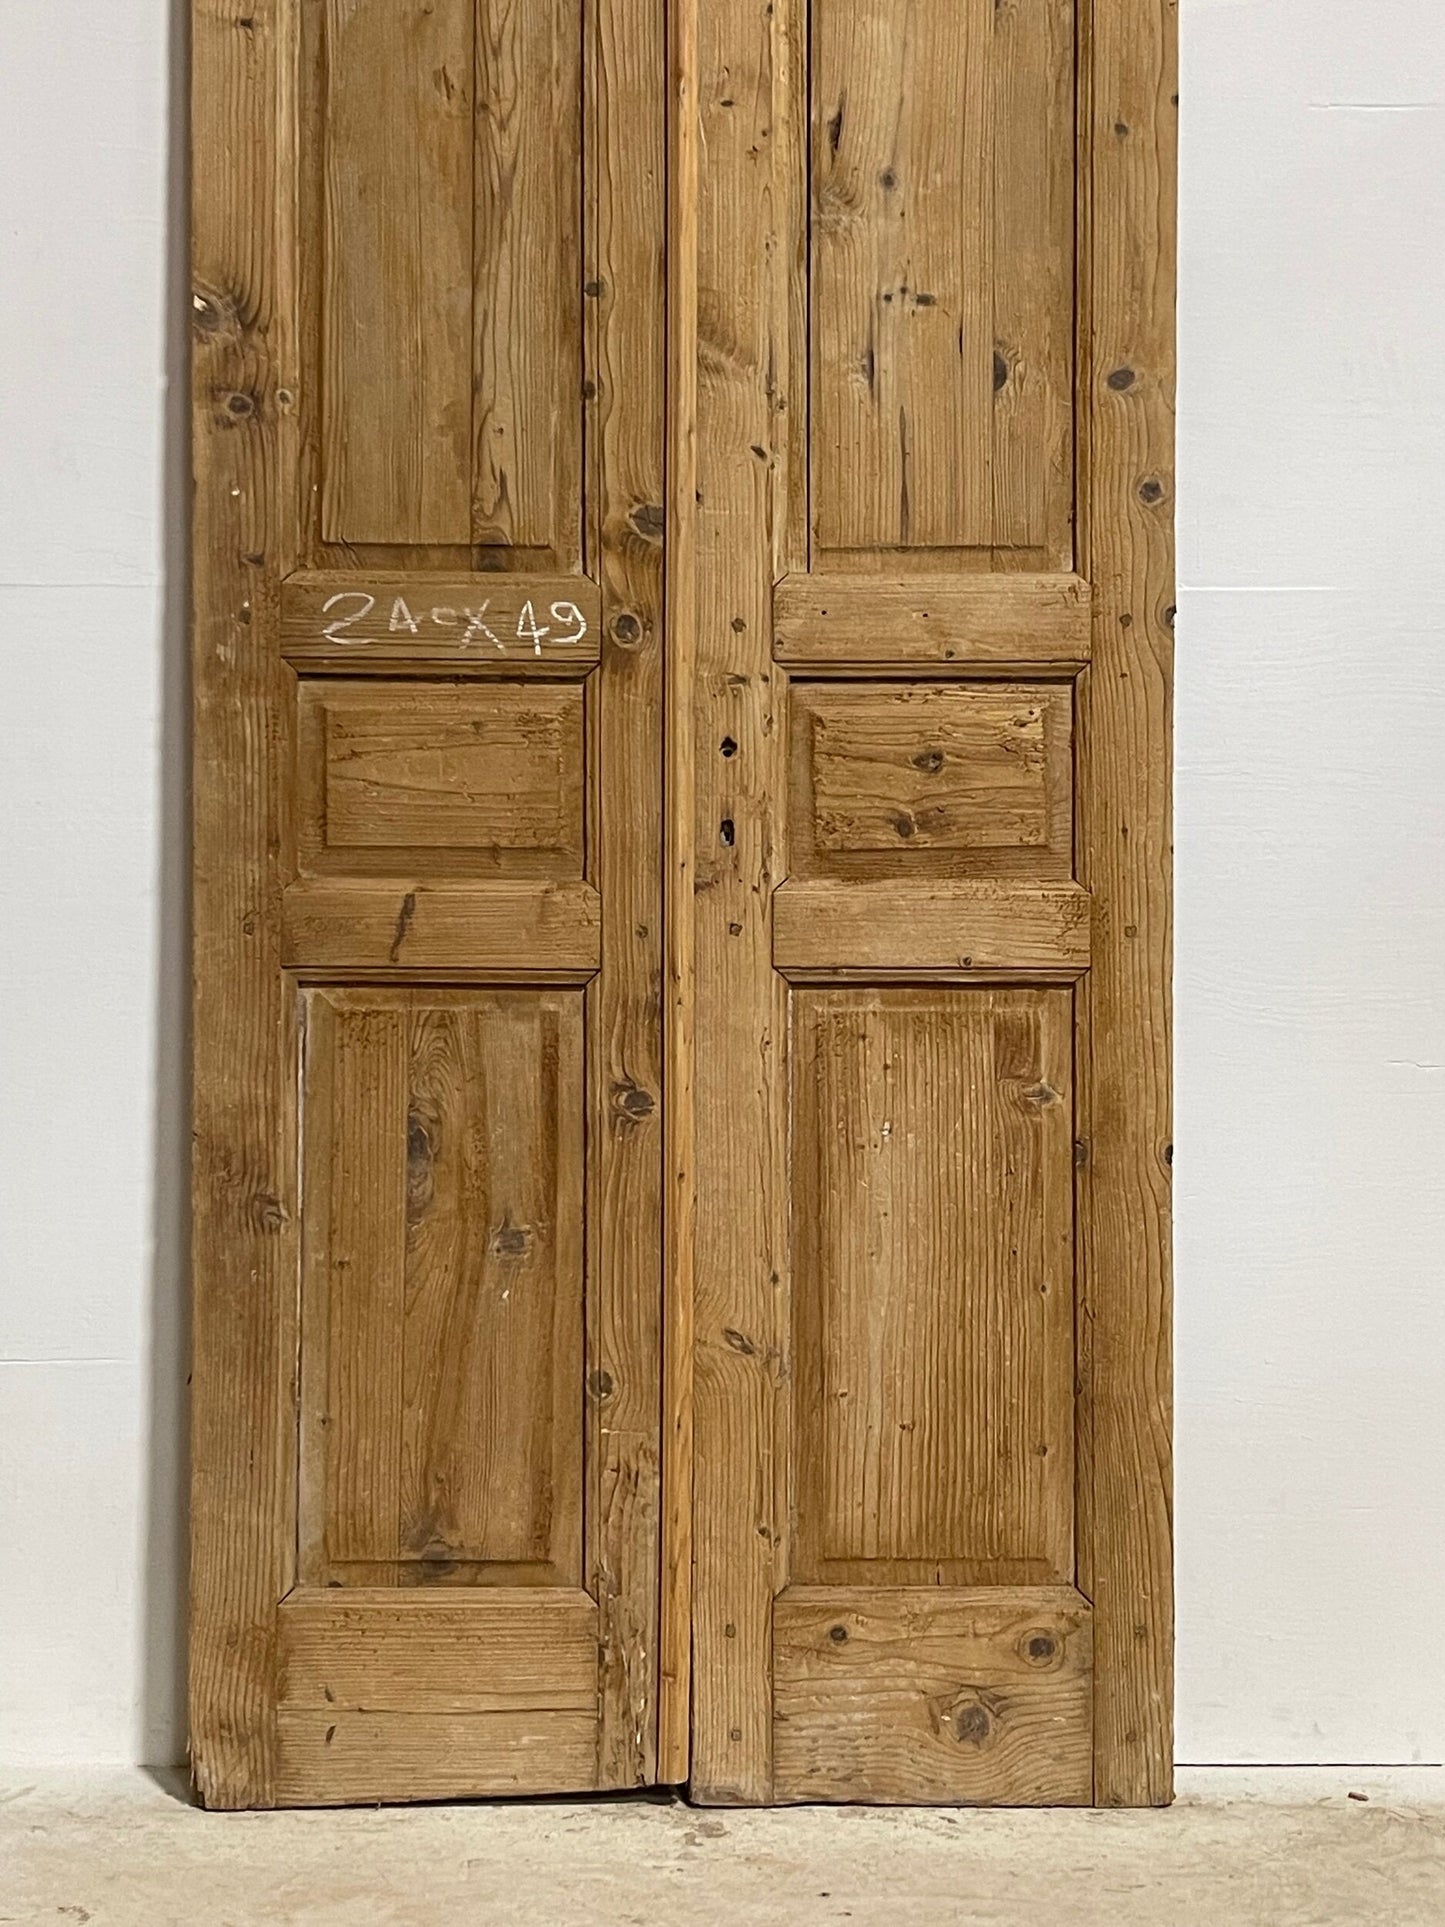 Antique French doors (94.5x38.5) H0154s